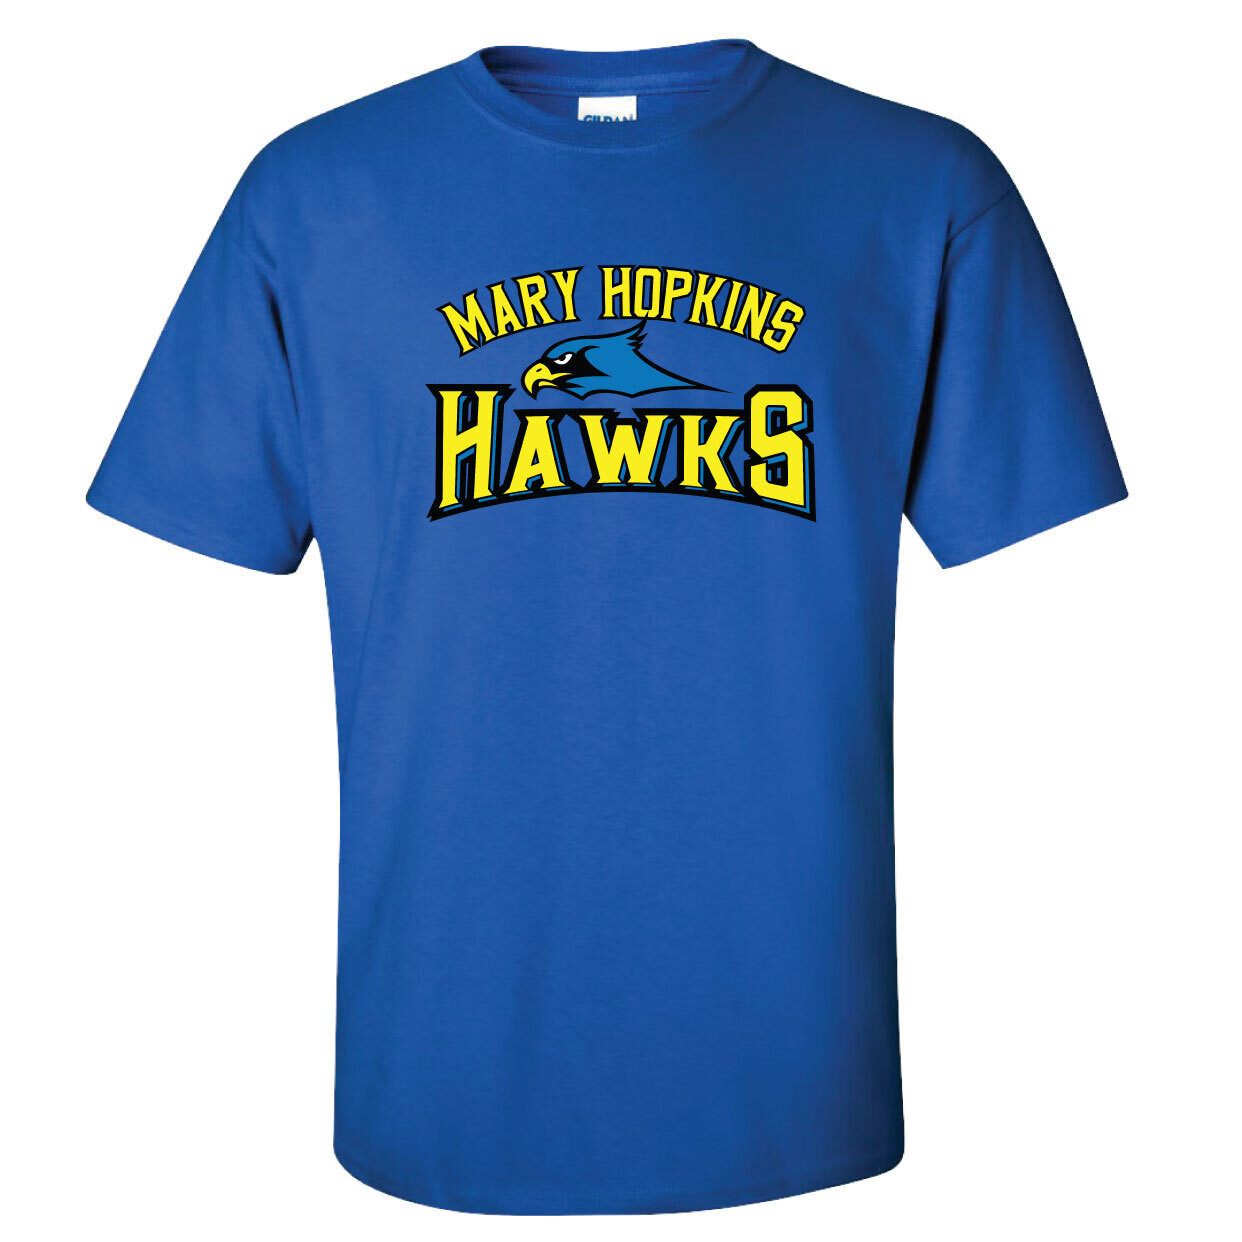 Mary Hopkins Hawks - T-Shirt (multi colour print)